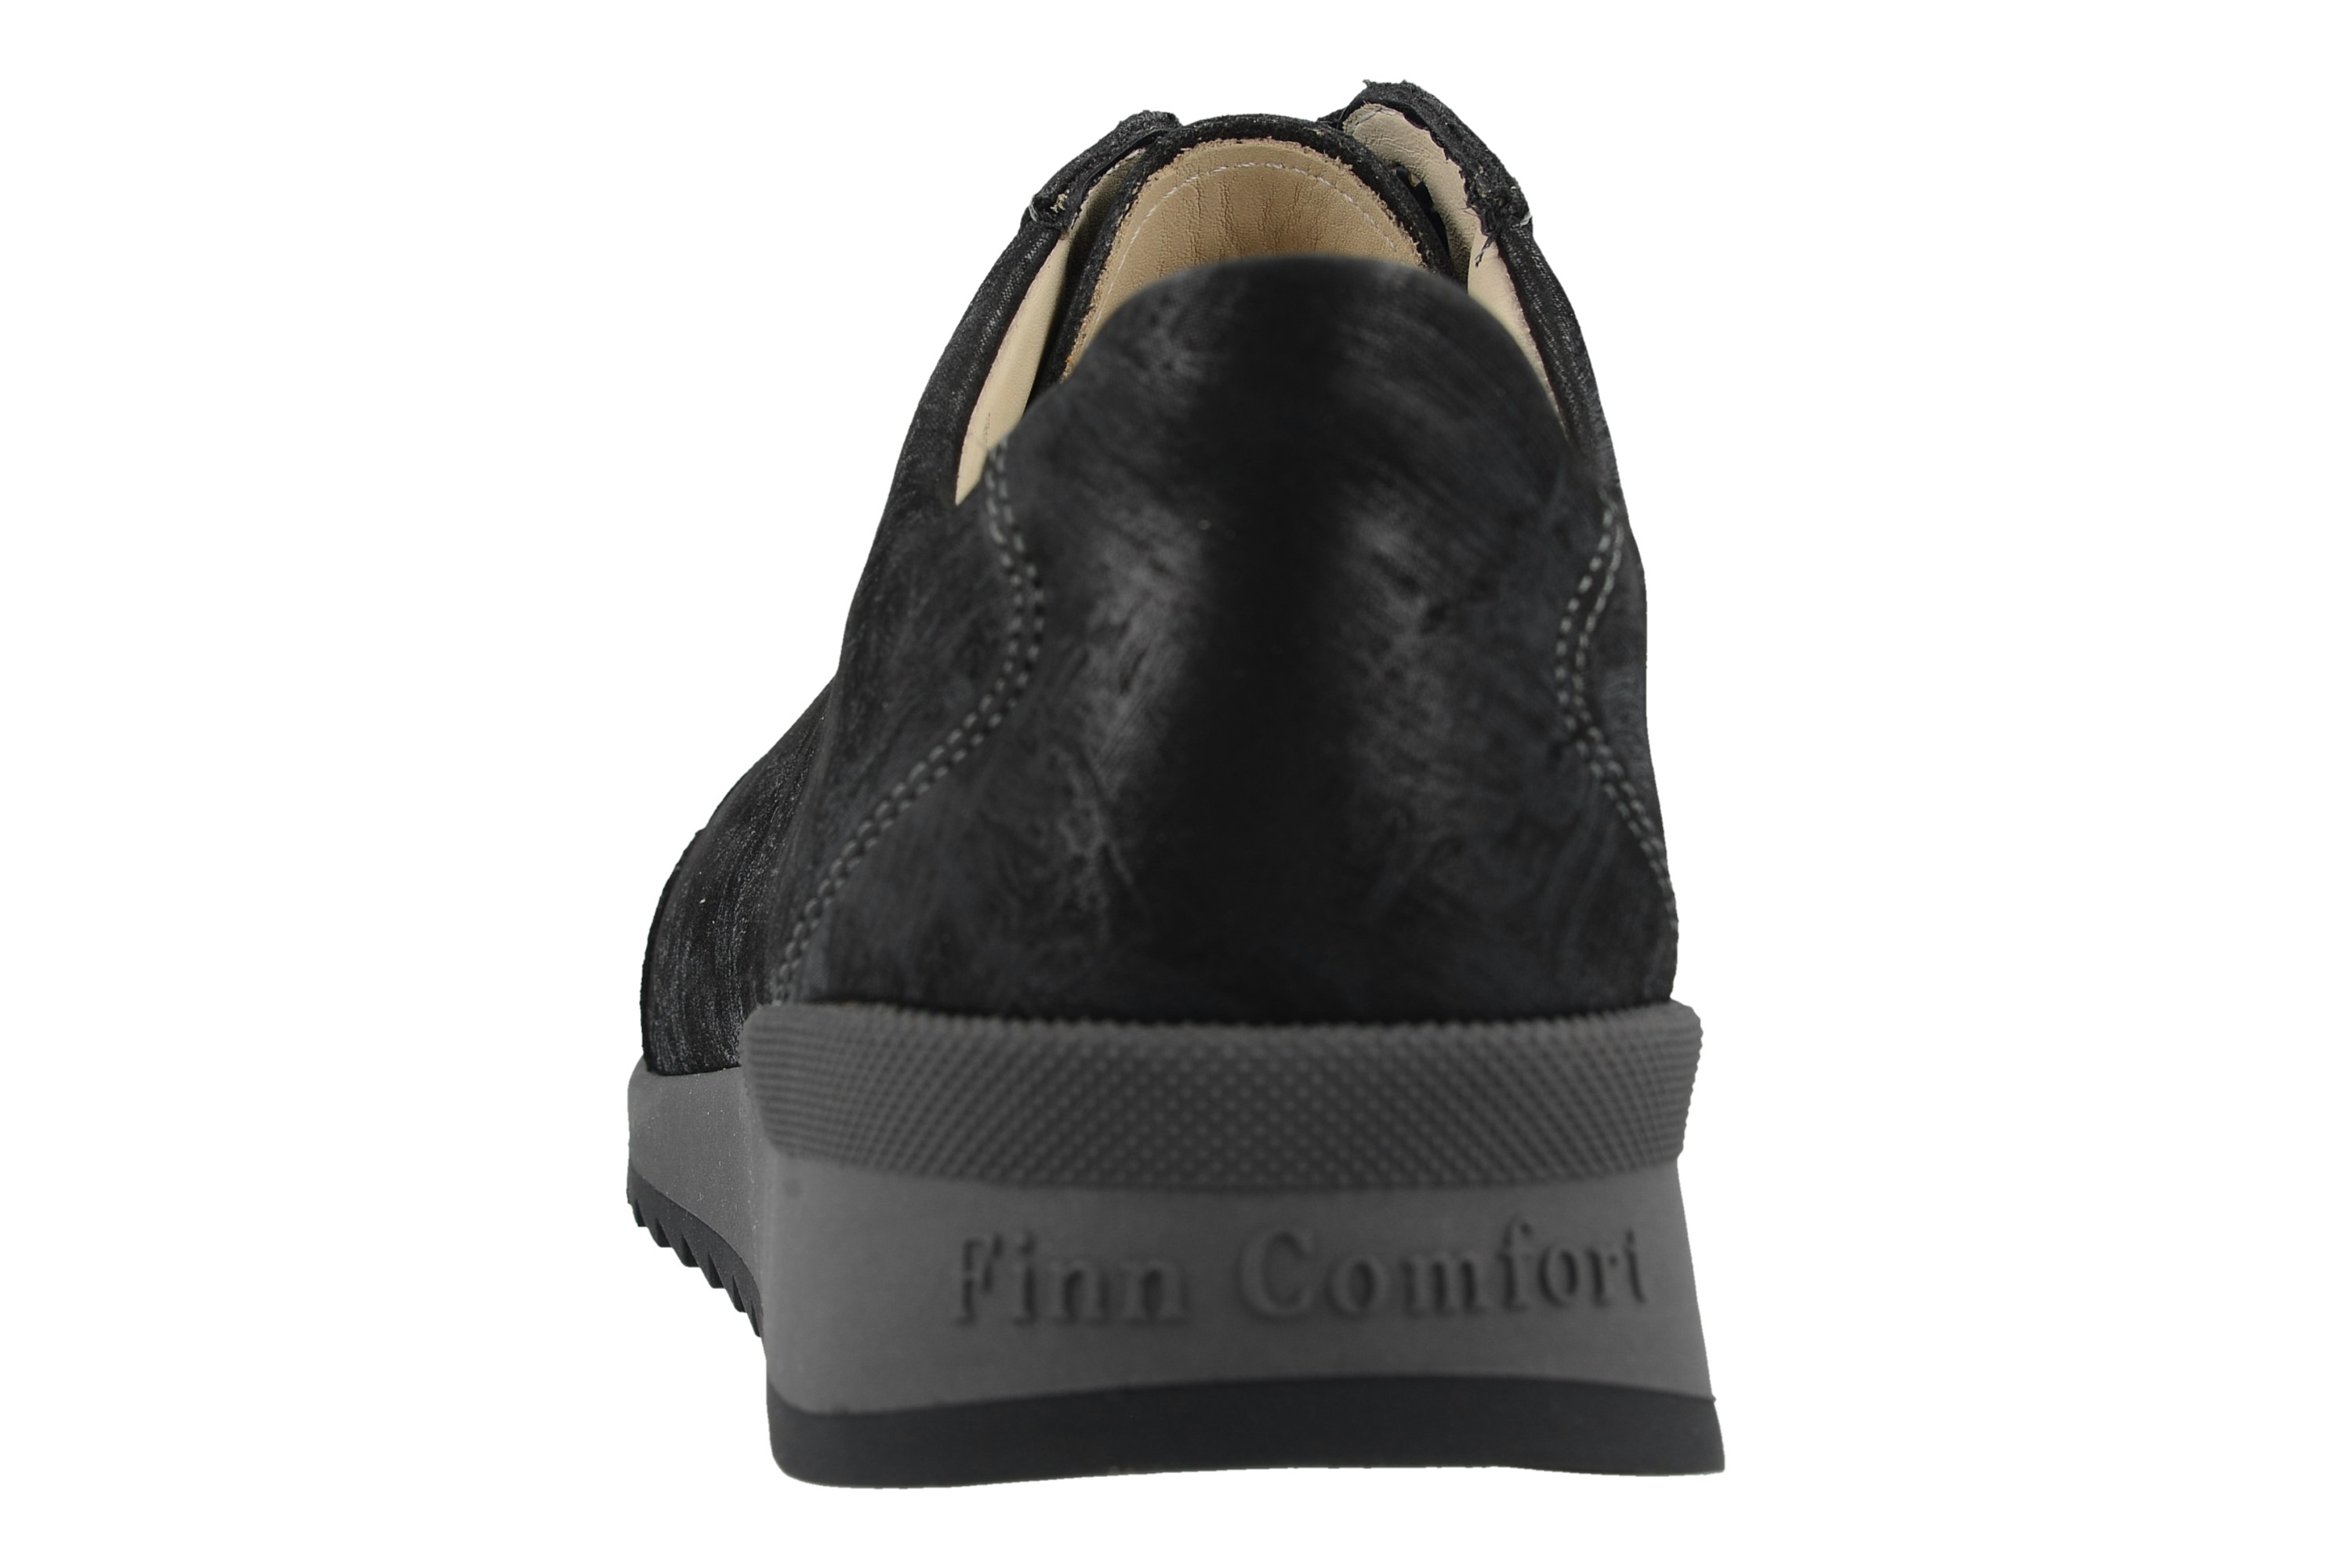 Finn Comfort Pordenone - Black Nubuck leather